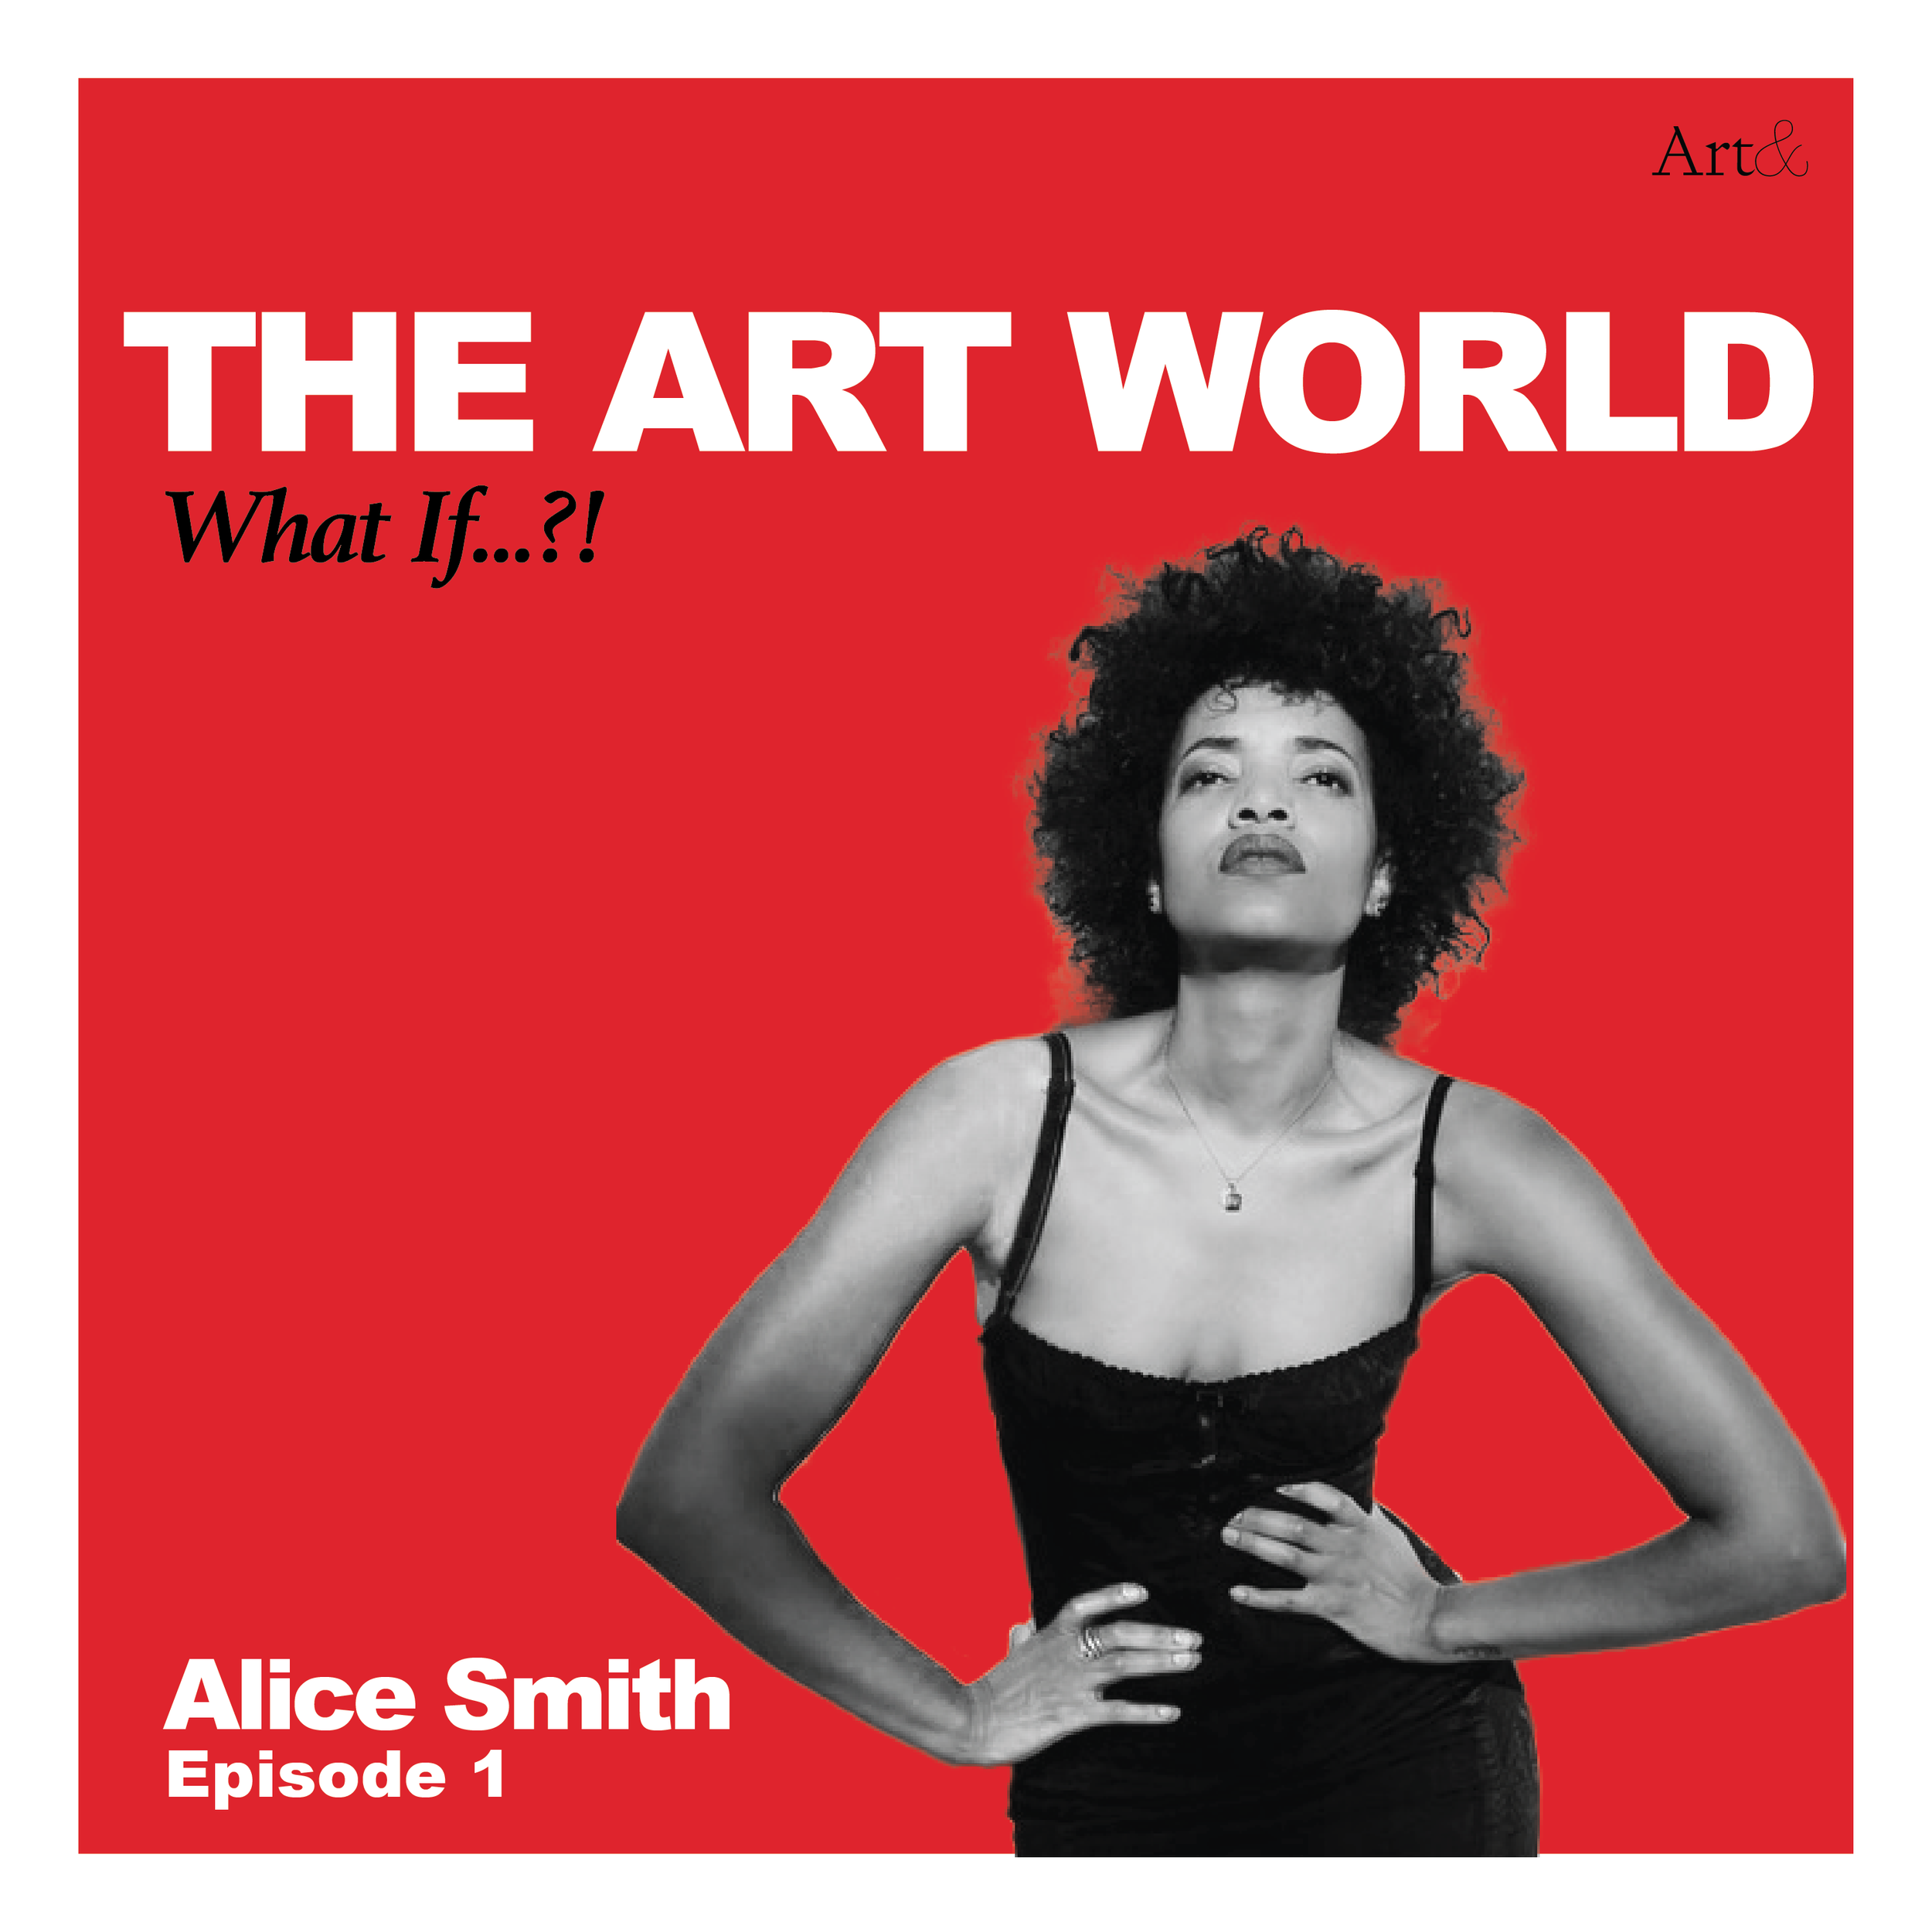 All Art& Posts: The Art World — Schwartzman